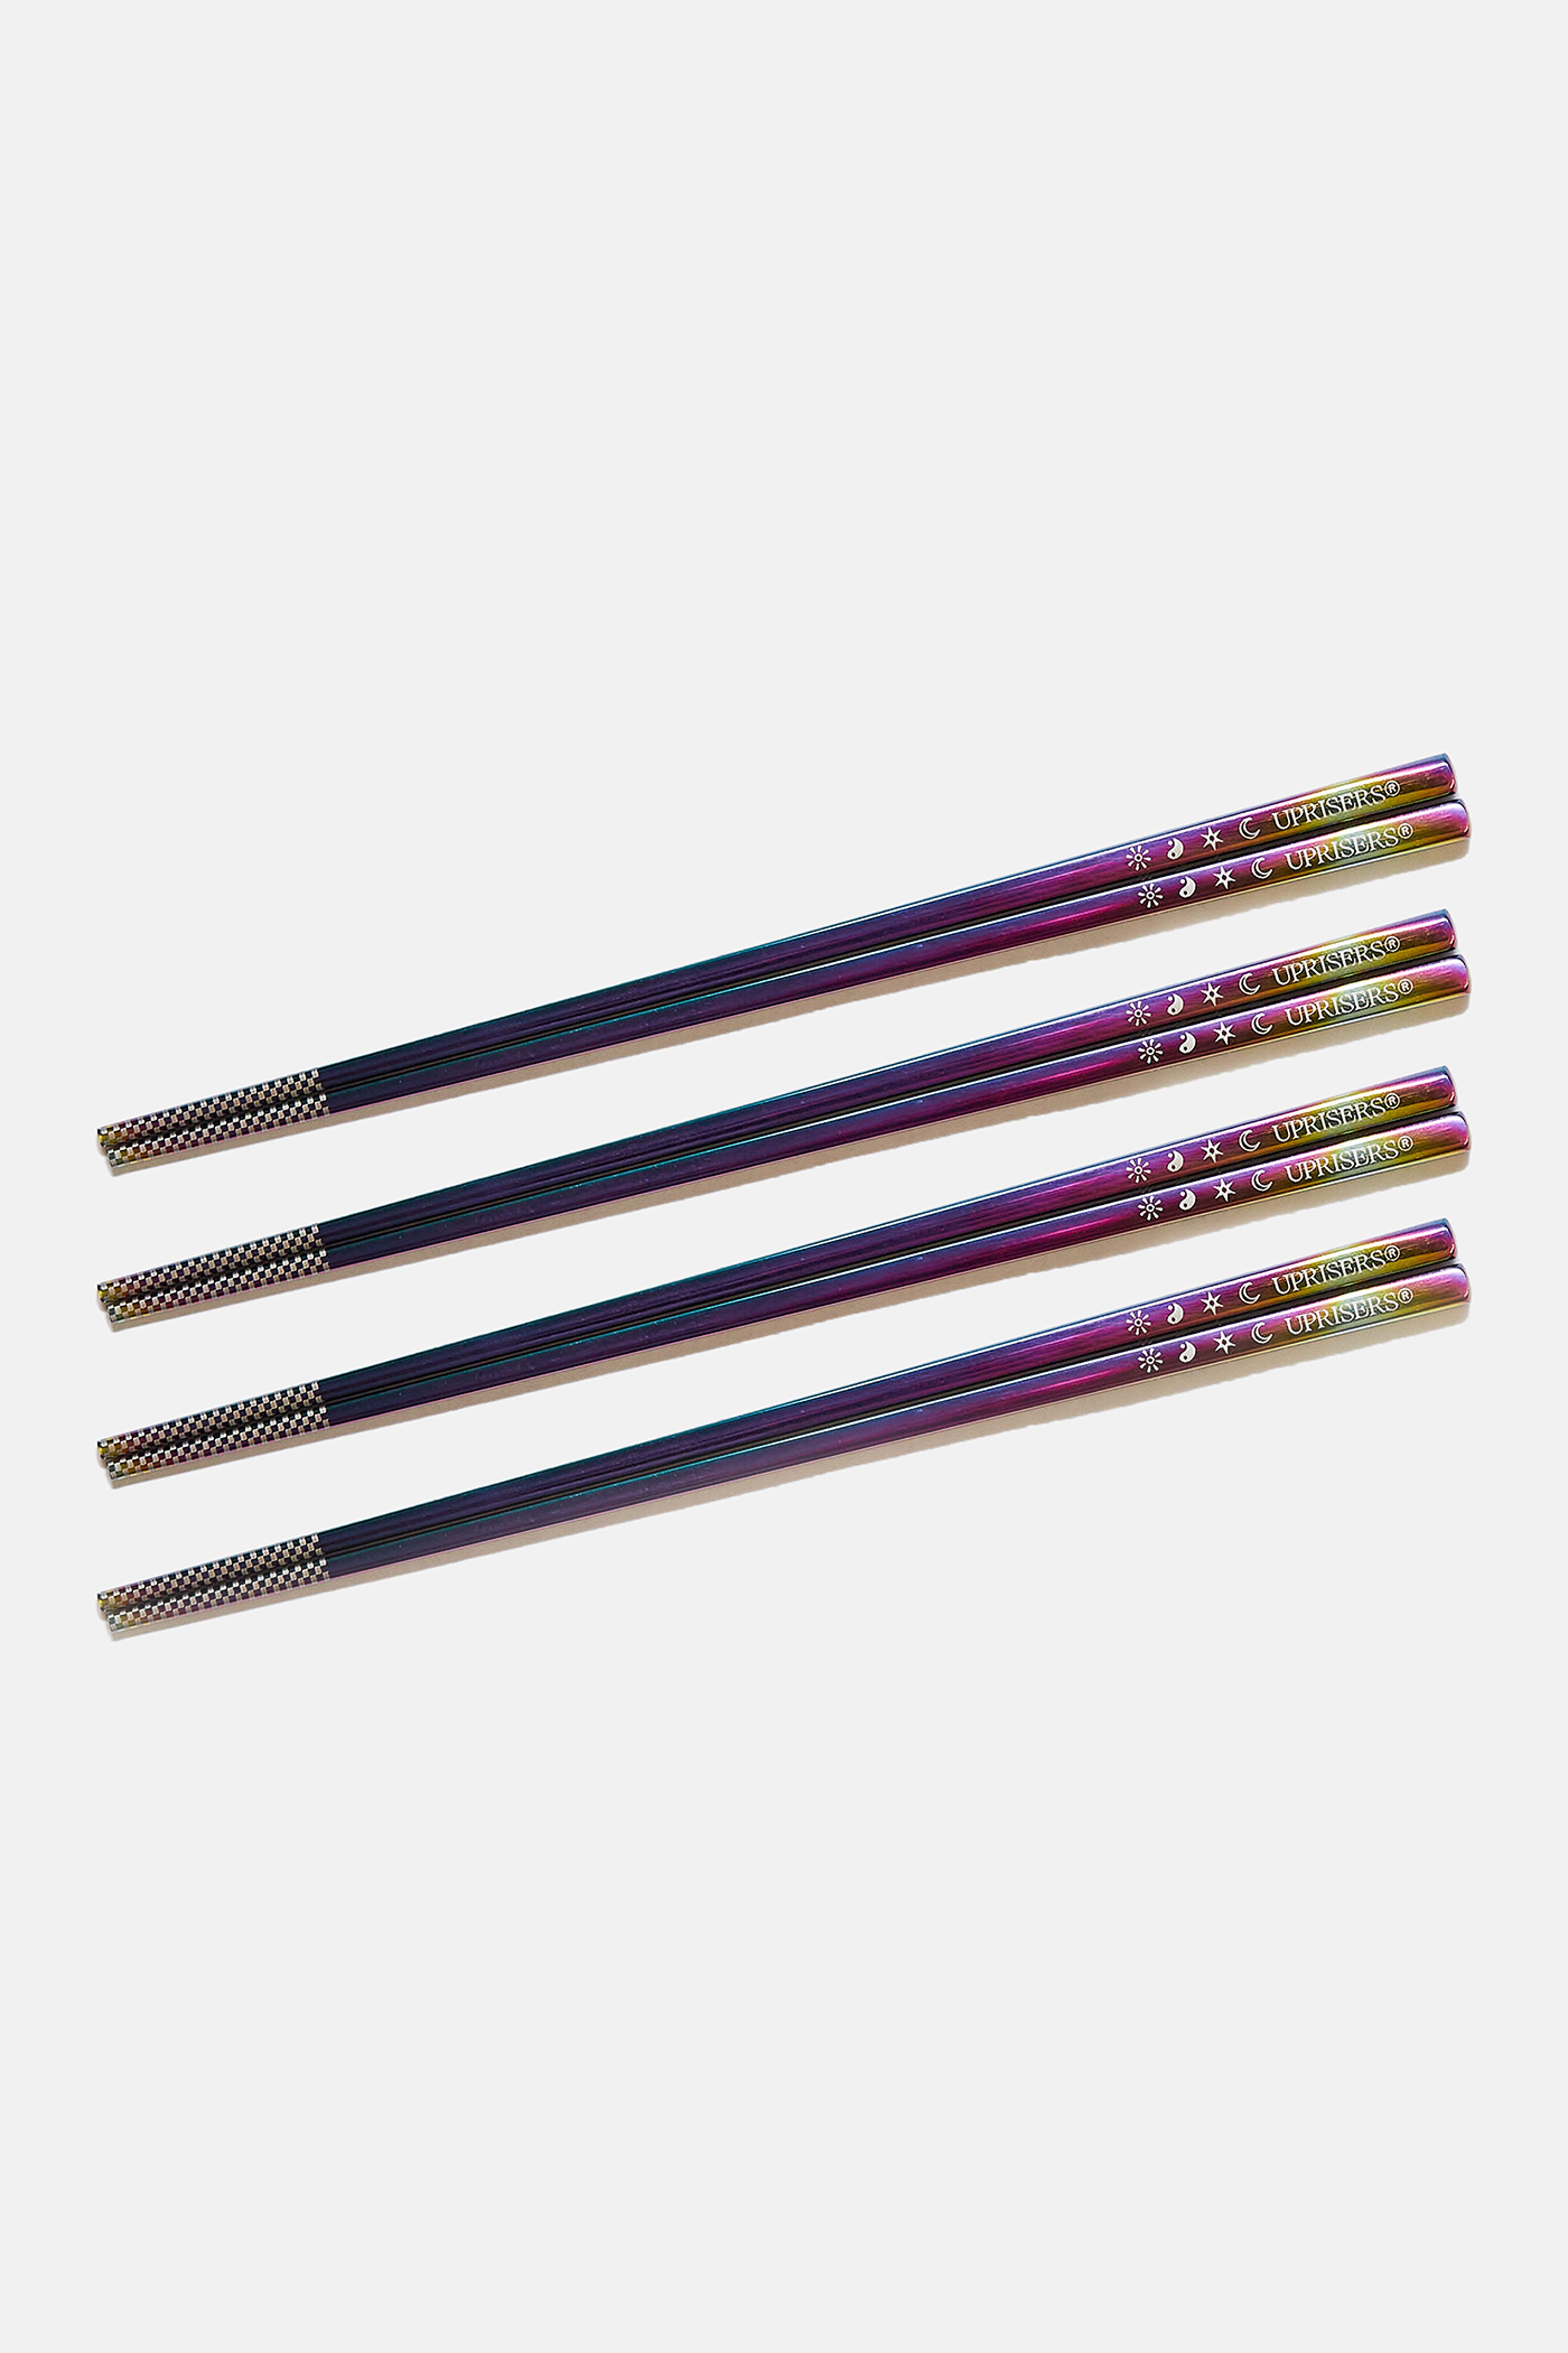 Alternate View 3 of UPRISERS Stainless Steel Chopsticks